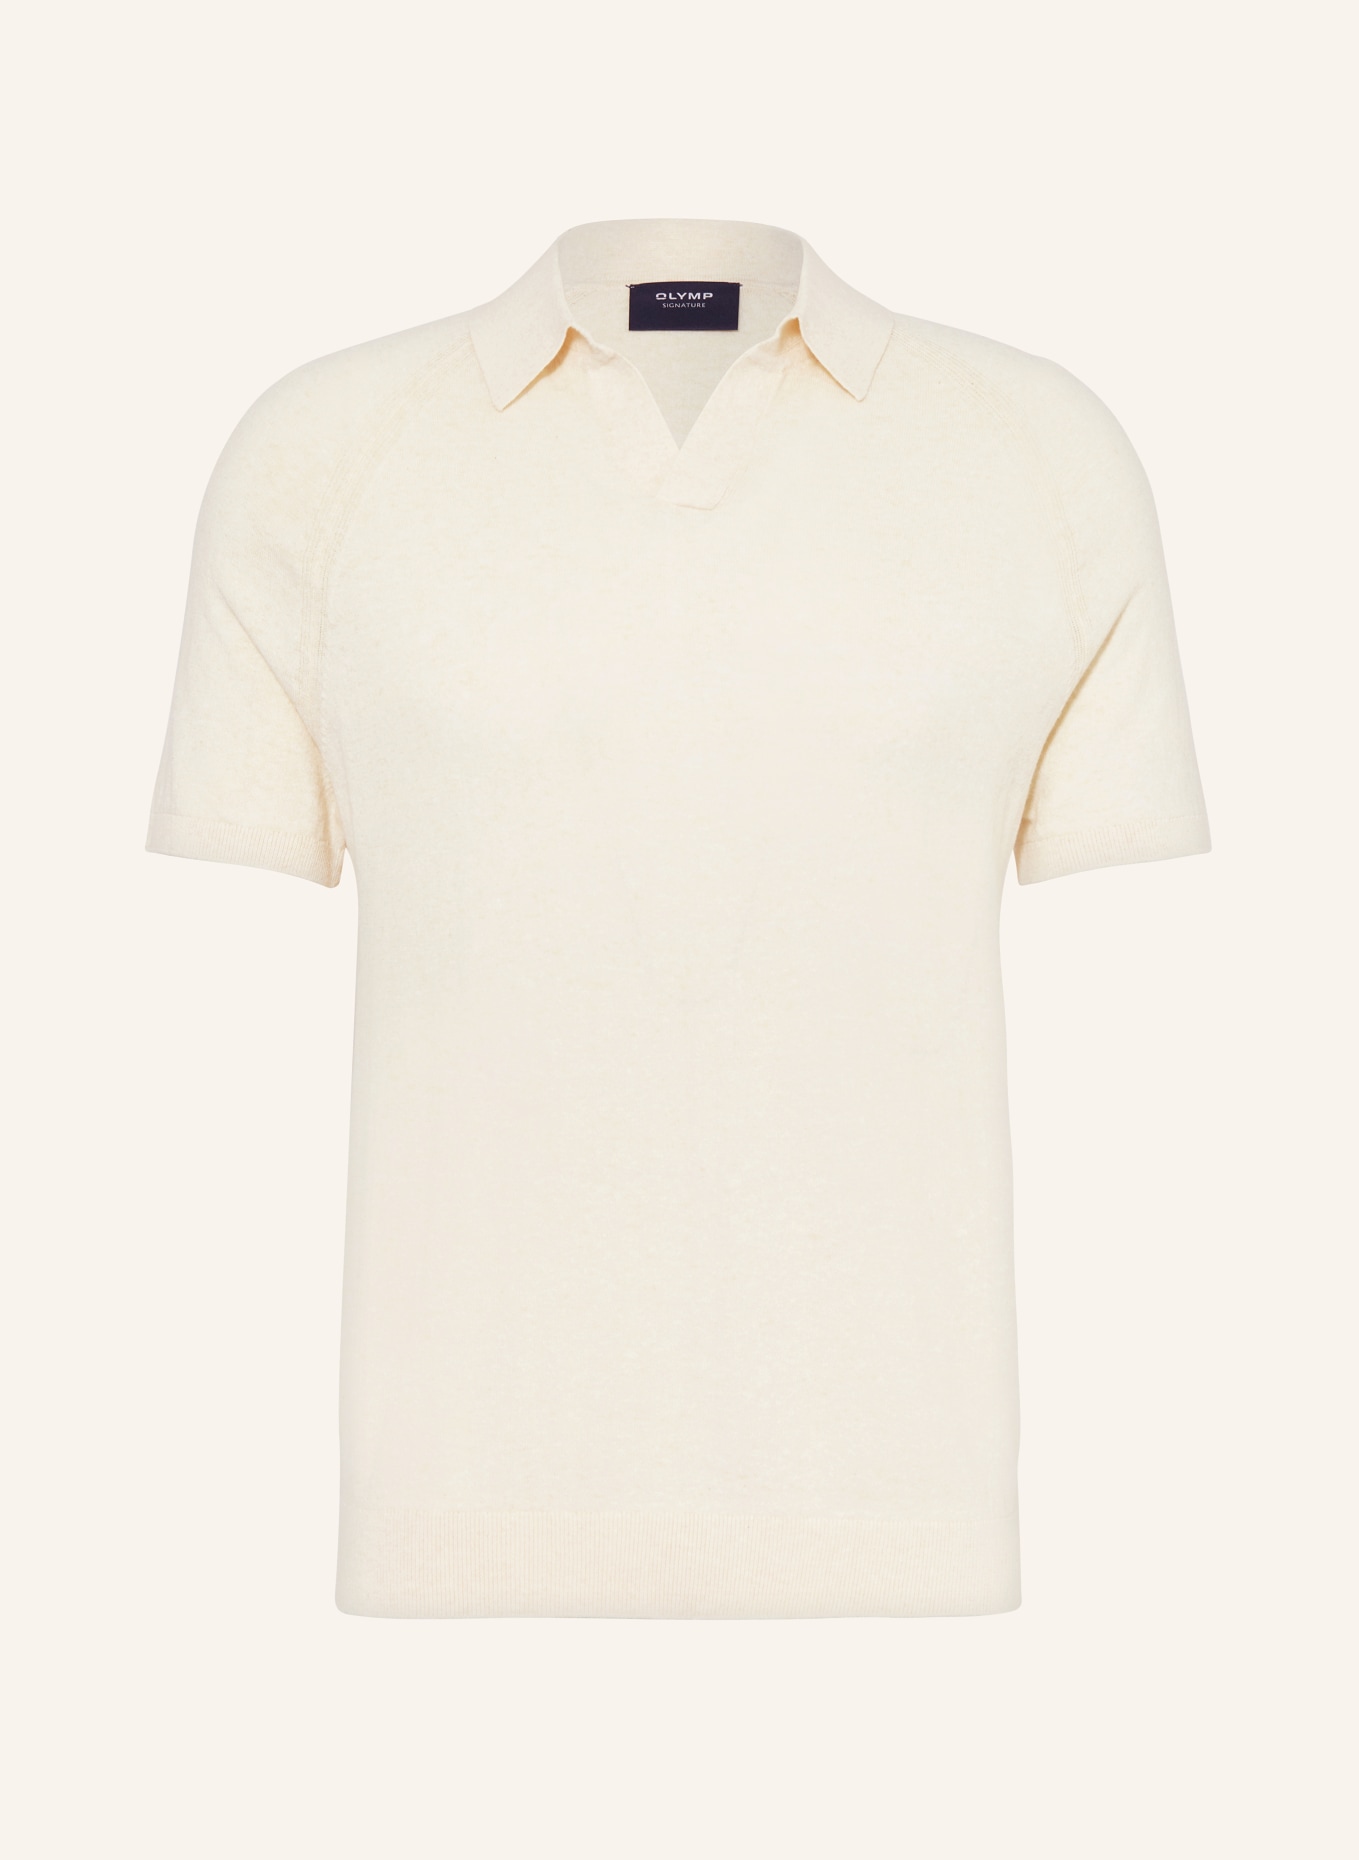 OLYMP SIGNATURE Strick-Poloshirt, Farbe: WEISS (Bild 1)